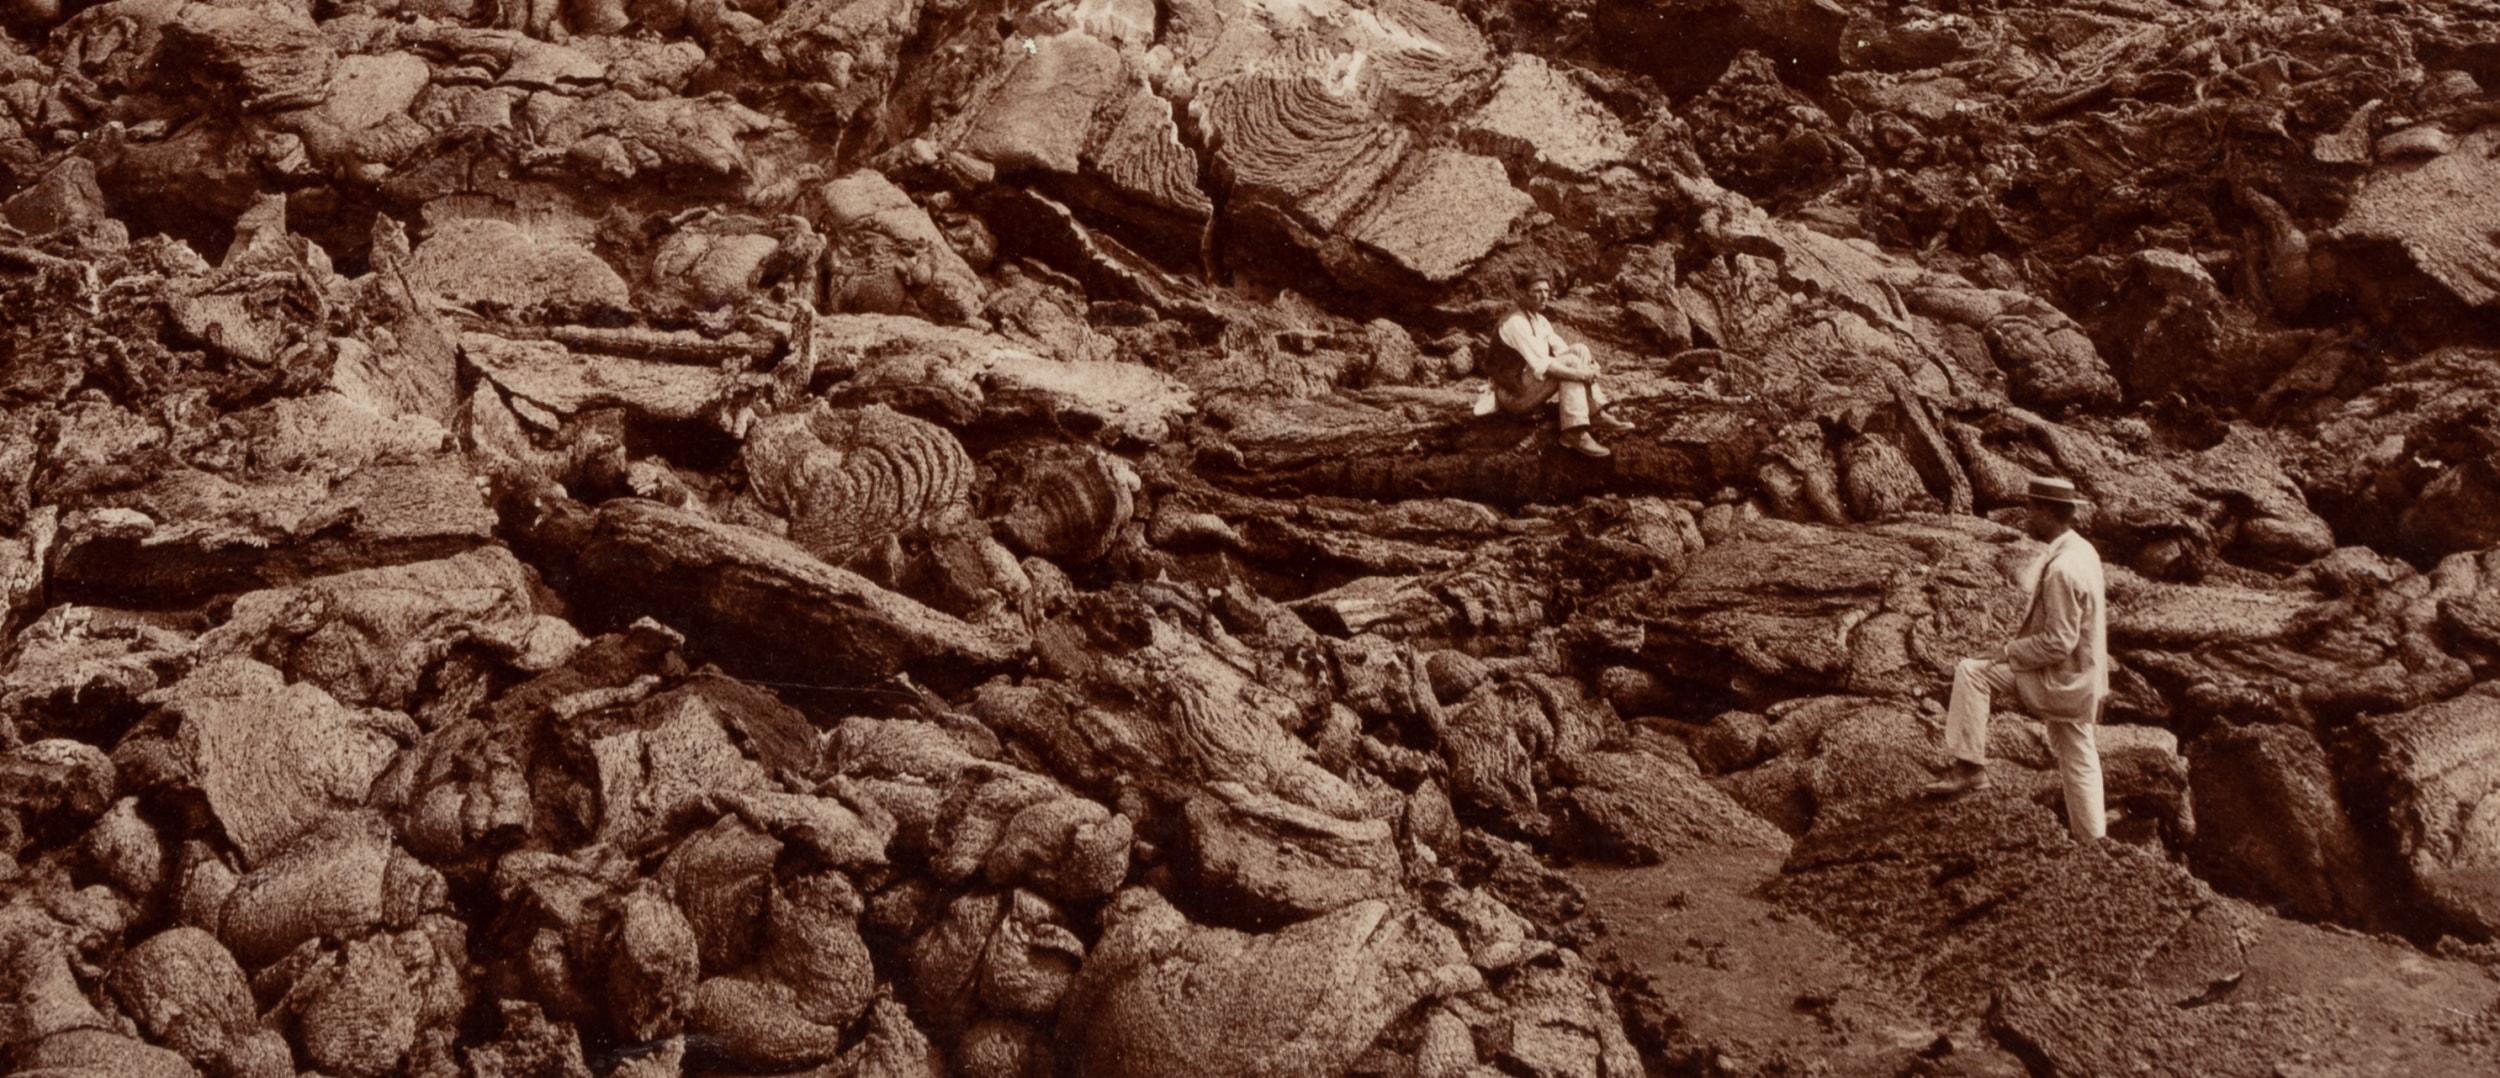 Fratelli Alinari (19th century): Wide lava rock landscape with posing person Vesuvius, Campania, c. 1880, albumen paper print

Technique: albumen paper print

Inscription: Lower middle signed in the printing plate: 